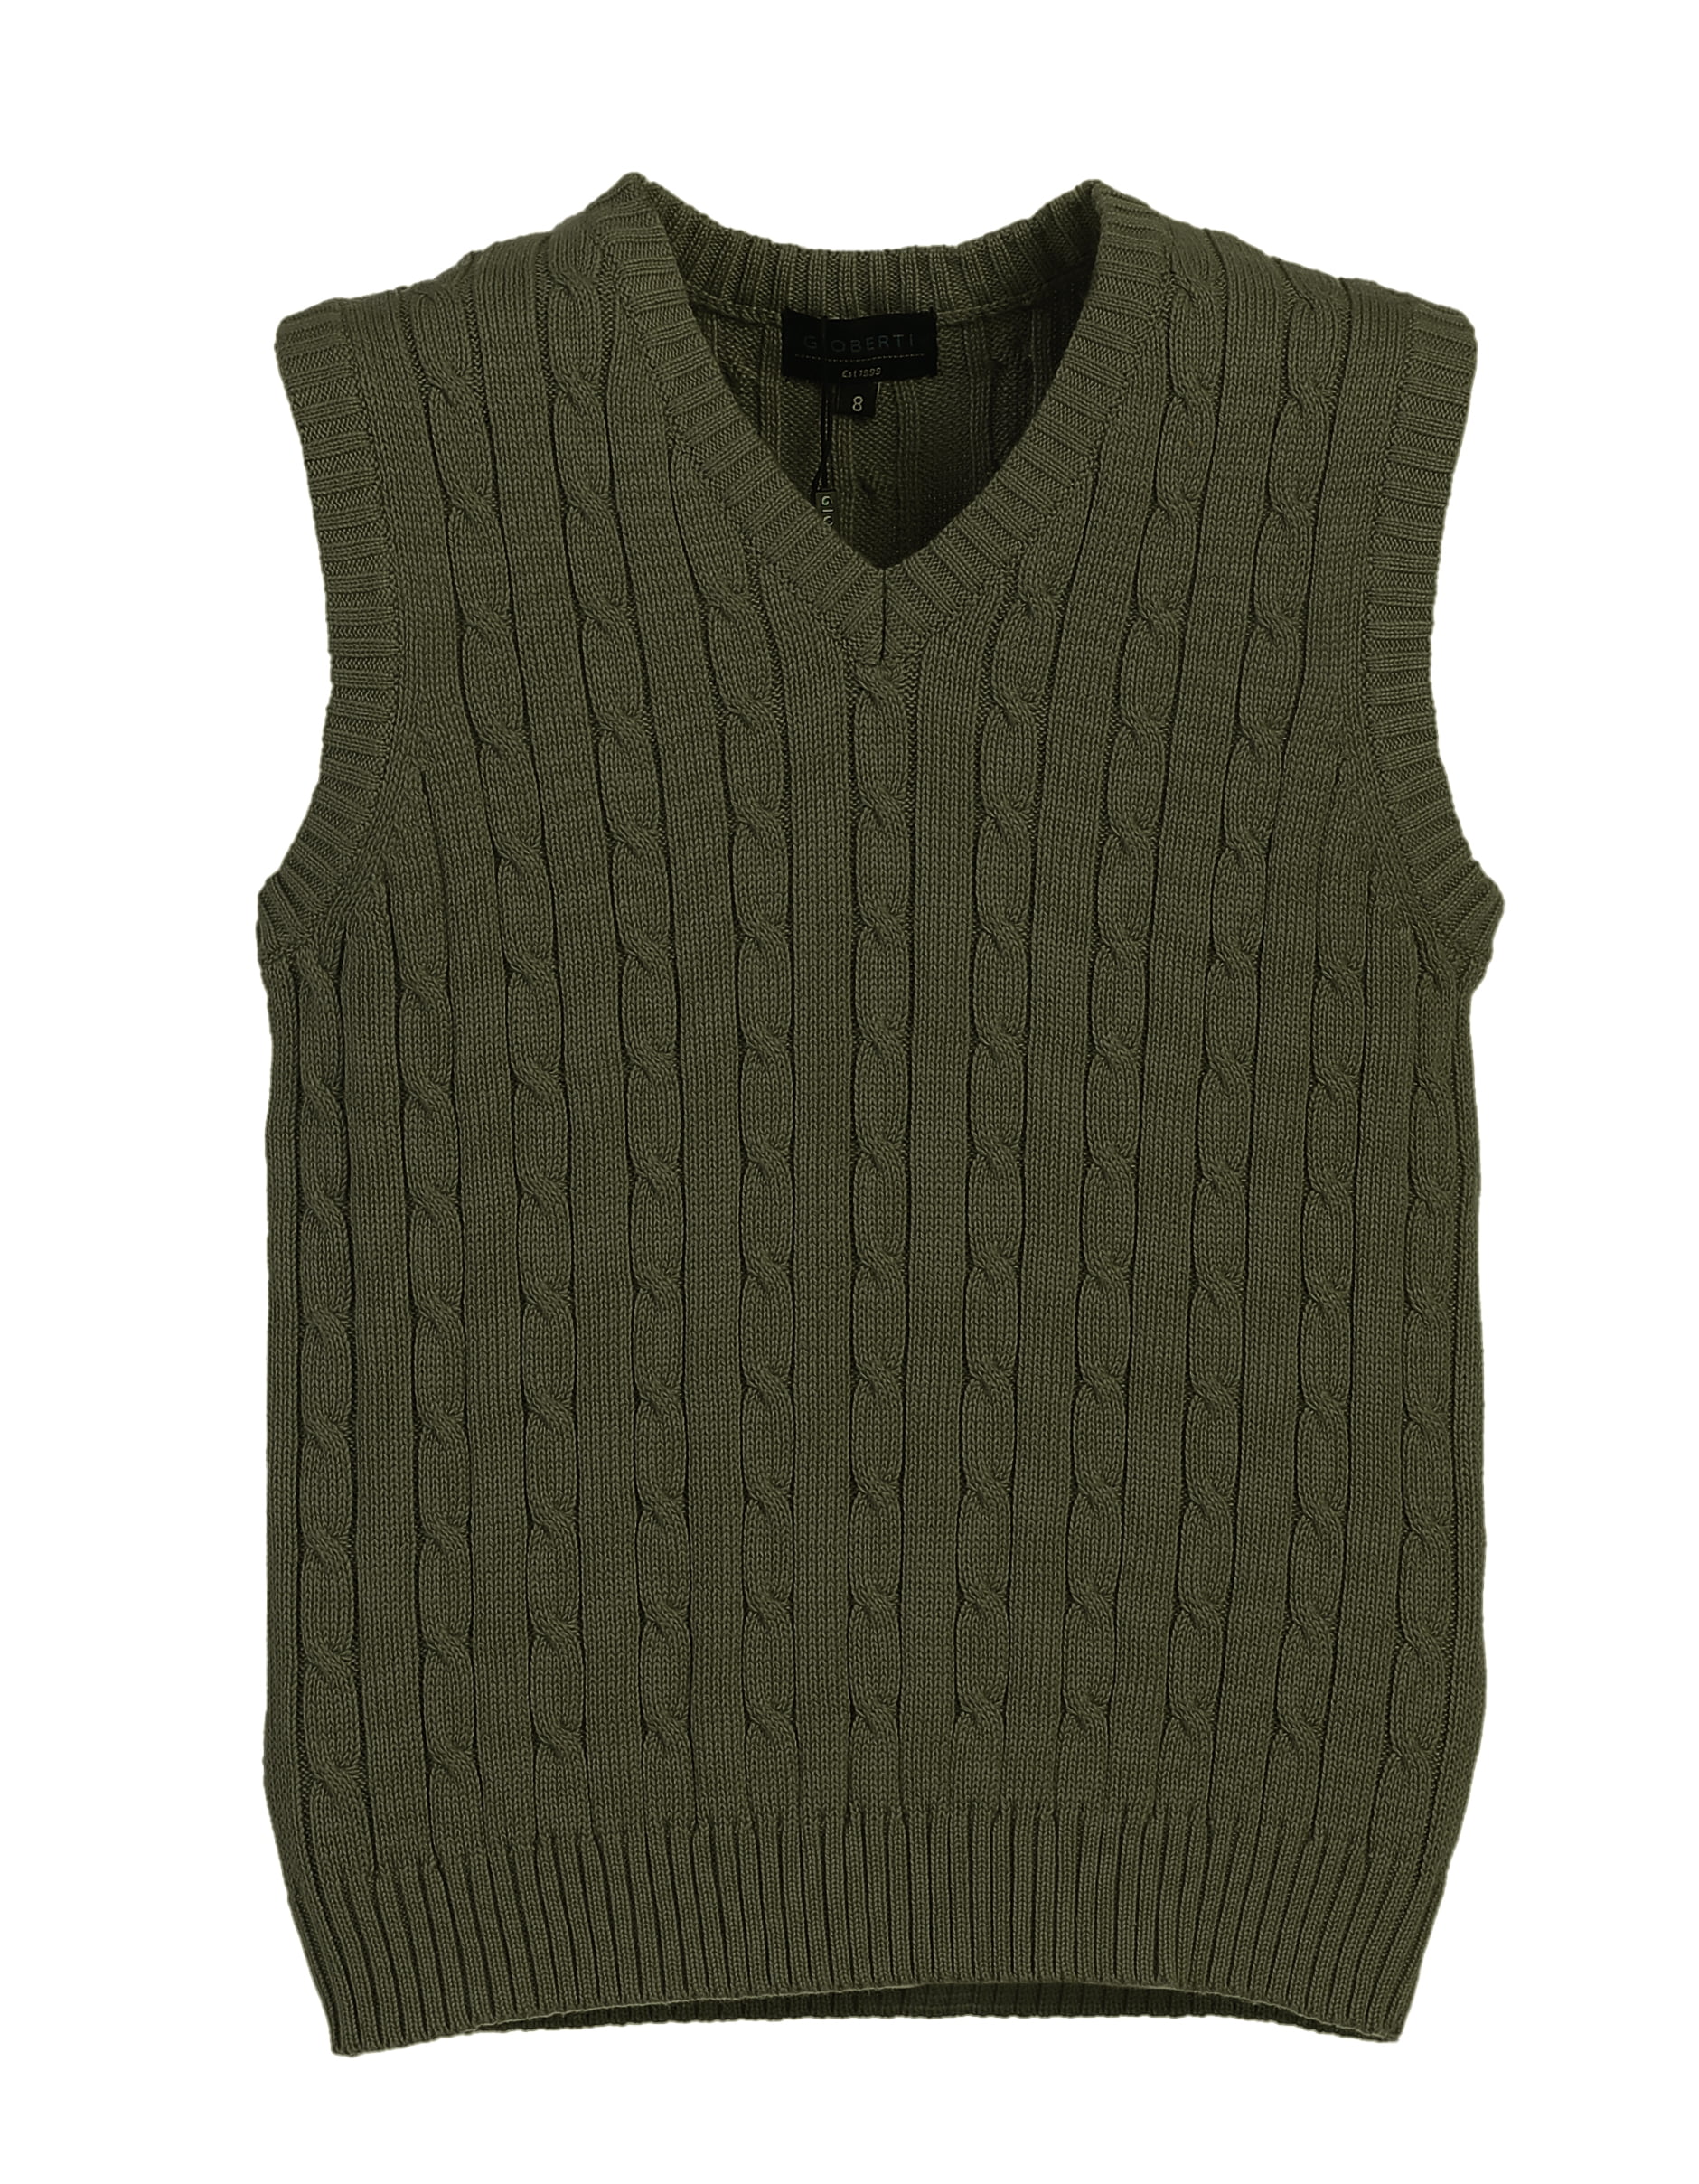 Gioberti Kids and Boys 100% Cotton Soft V-Neck Cable Knit Sweater Vest ...